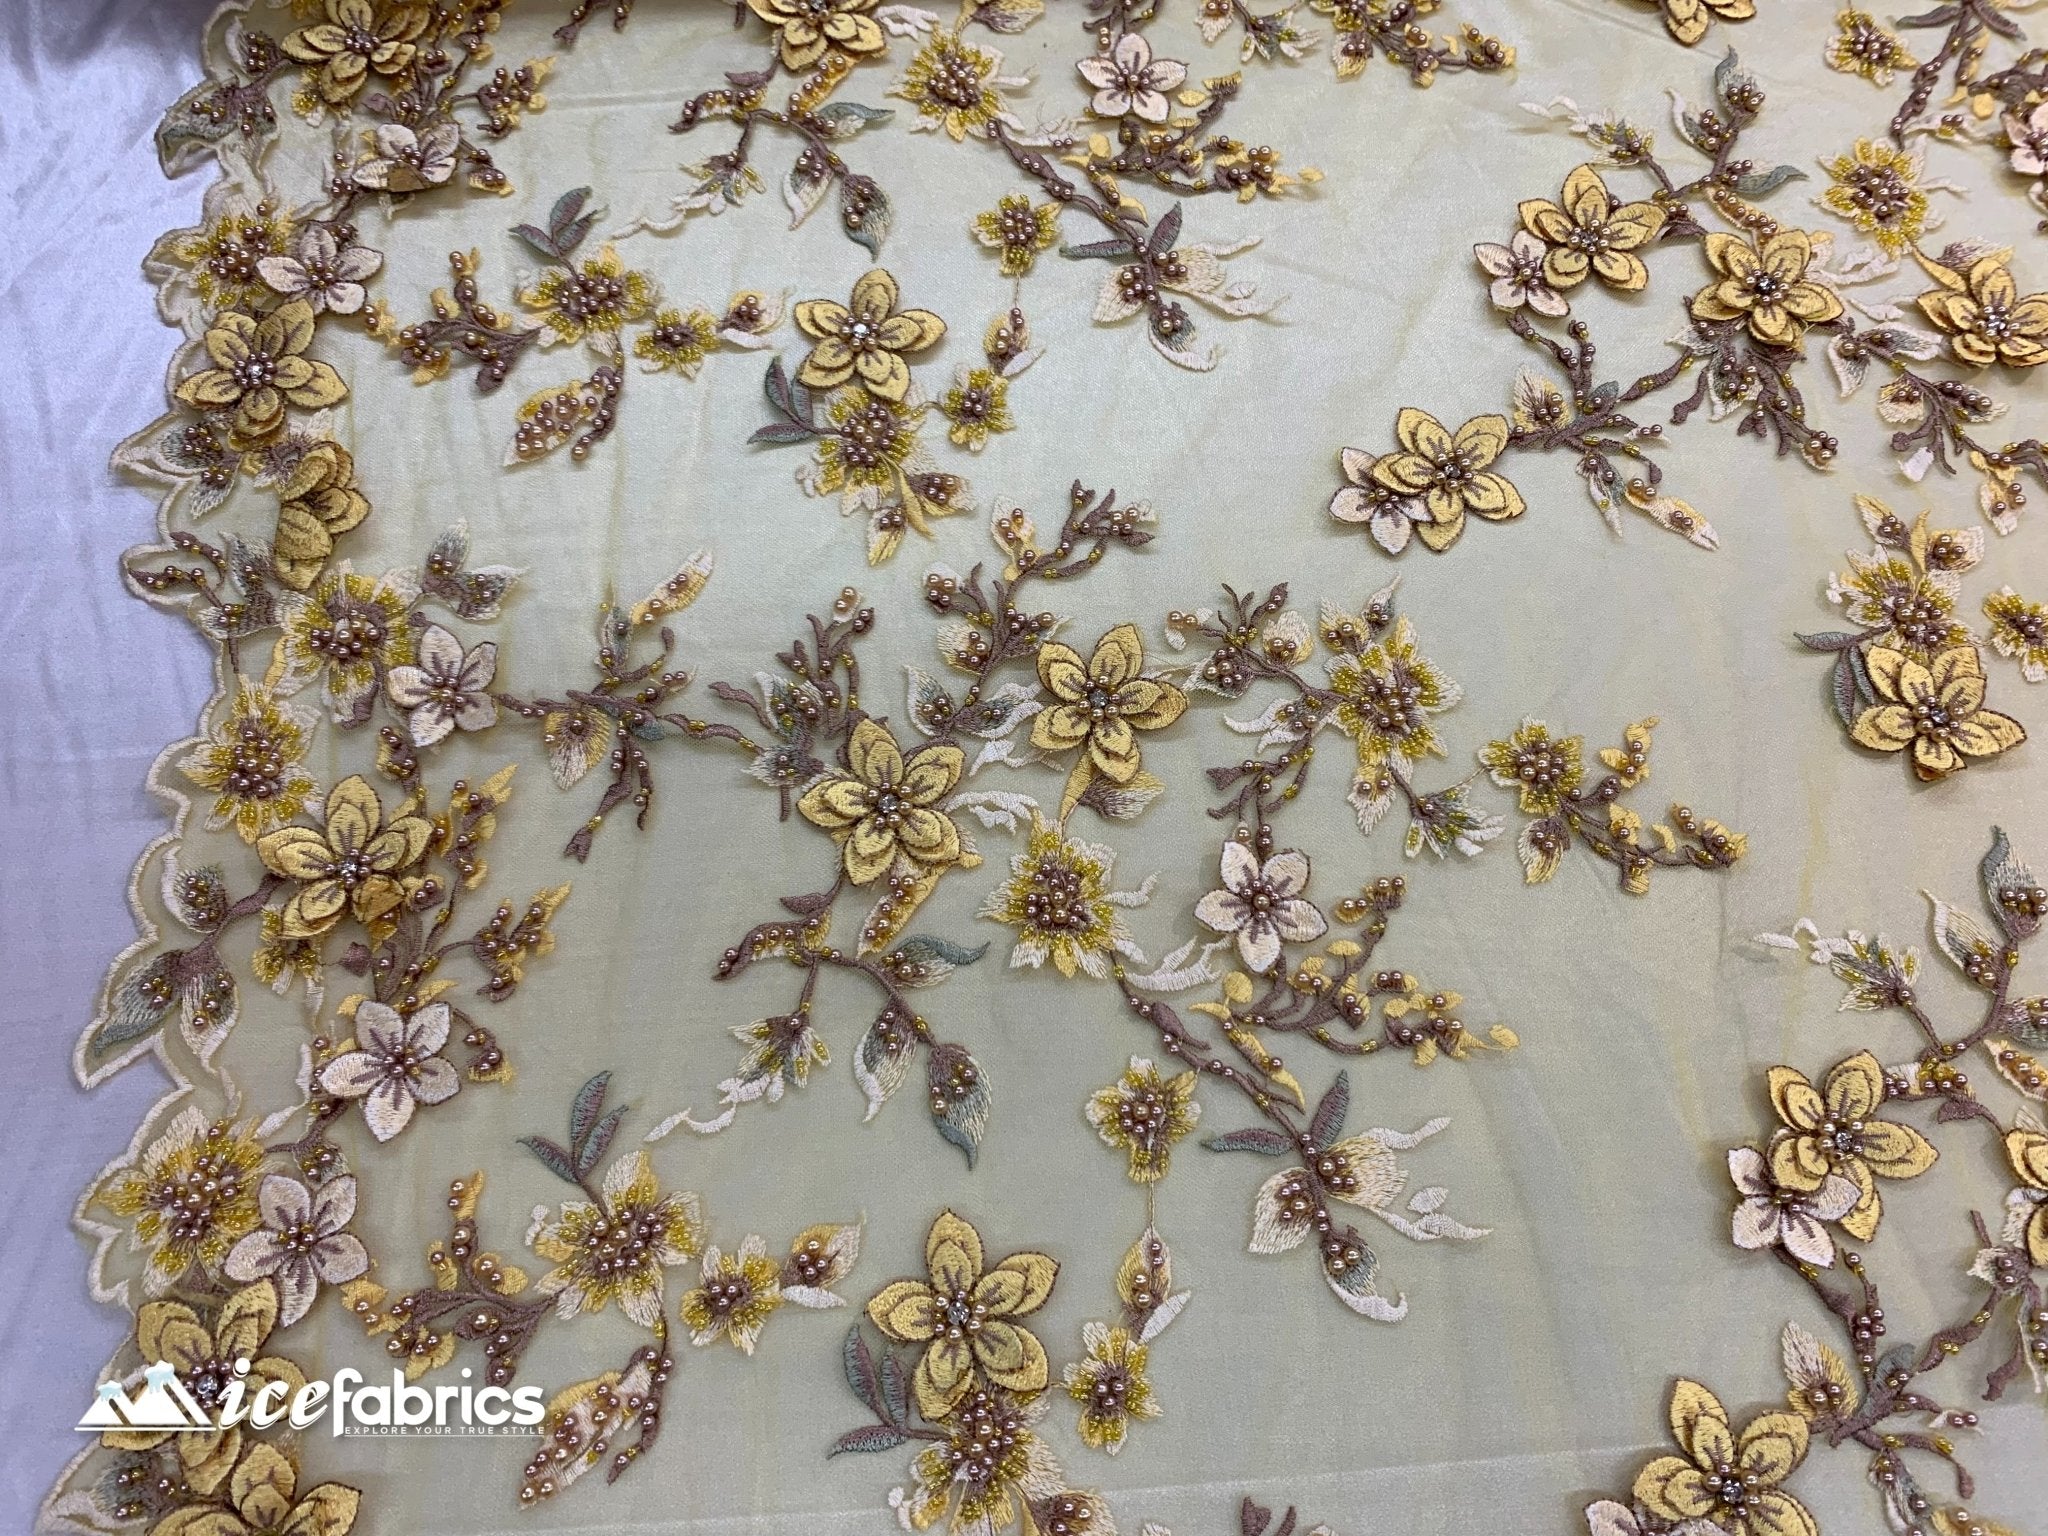 Embroidered Fabric/ 3D Flowers Beaded Fabric/ Lace Fabric/ YellowICE FABRICSICE FABRICSYellowEmbroidered Fabric/ 3D Flowers Beaded Fabric/ Lace Fabric/ Yellow ICE FABRICS